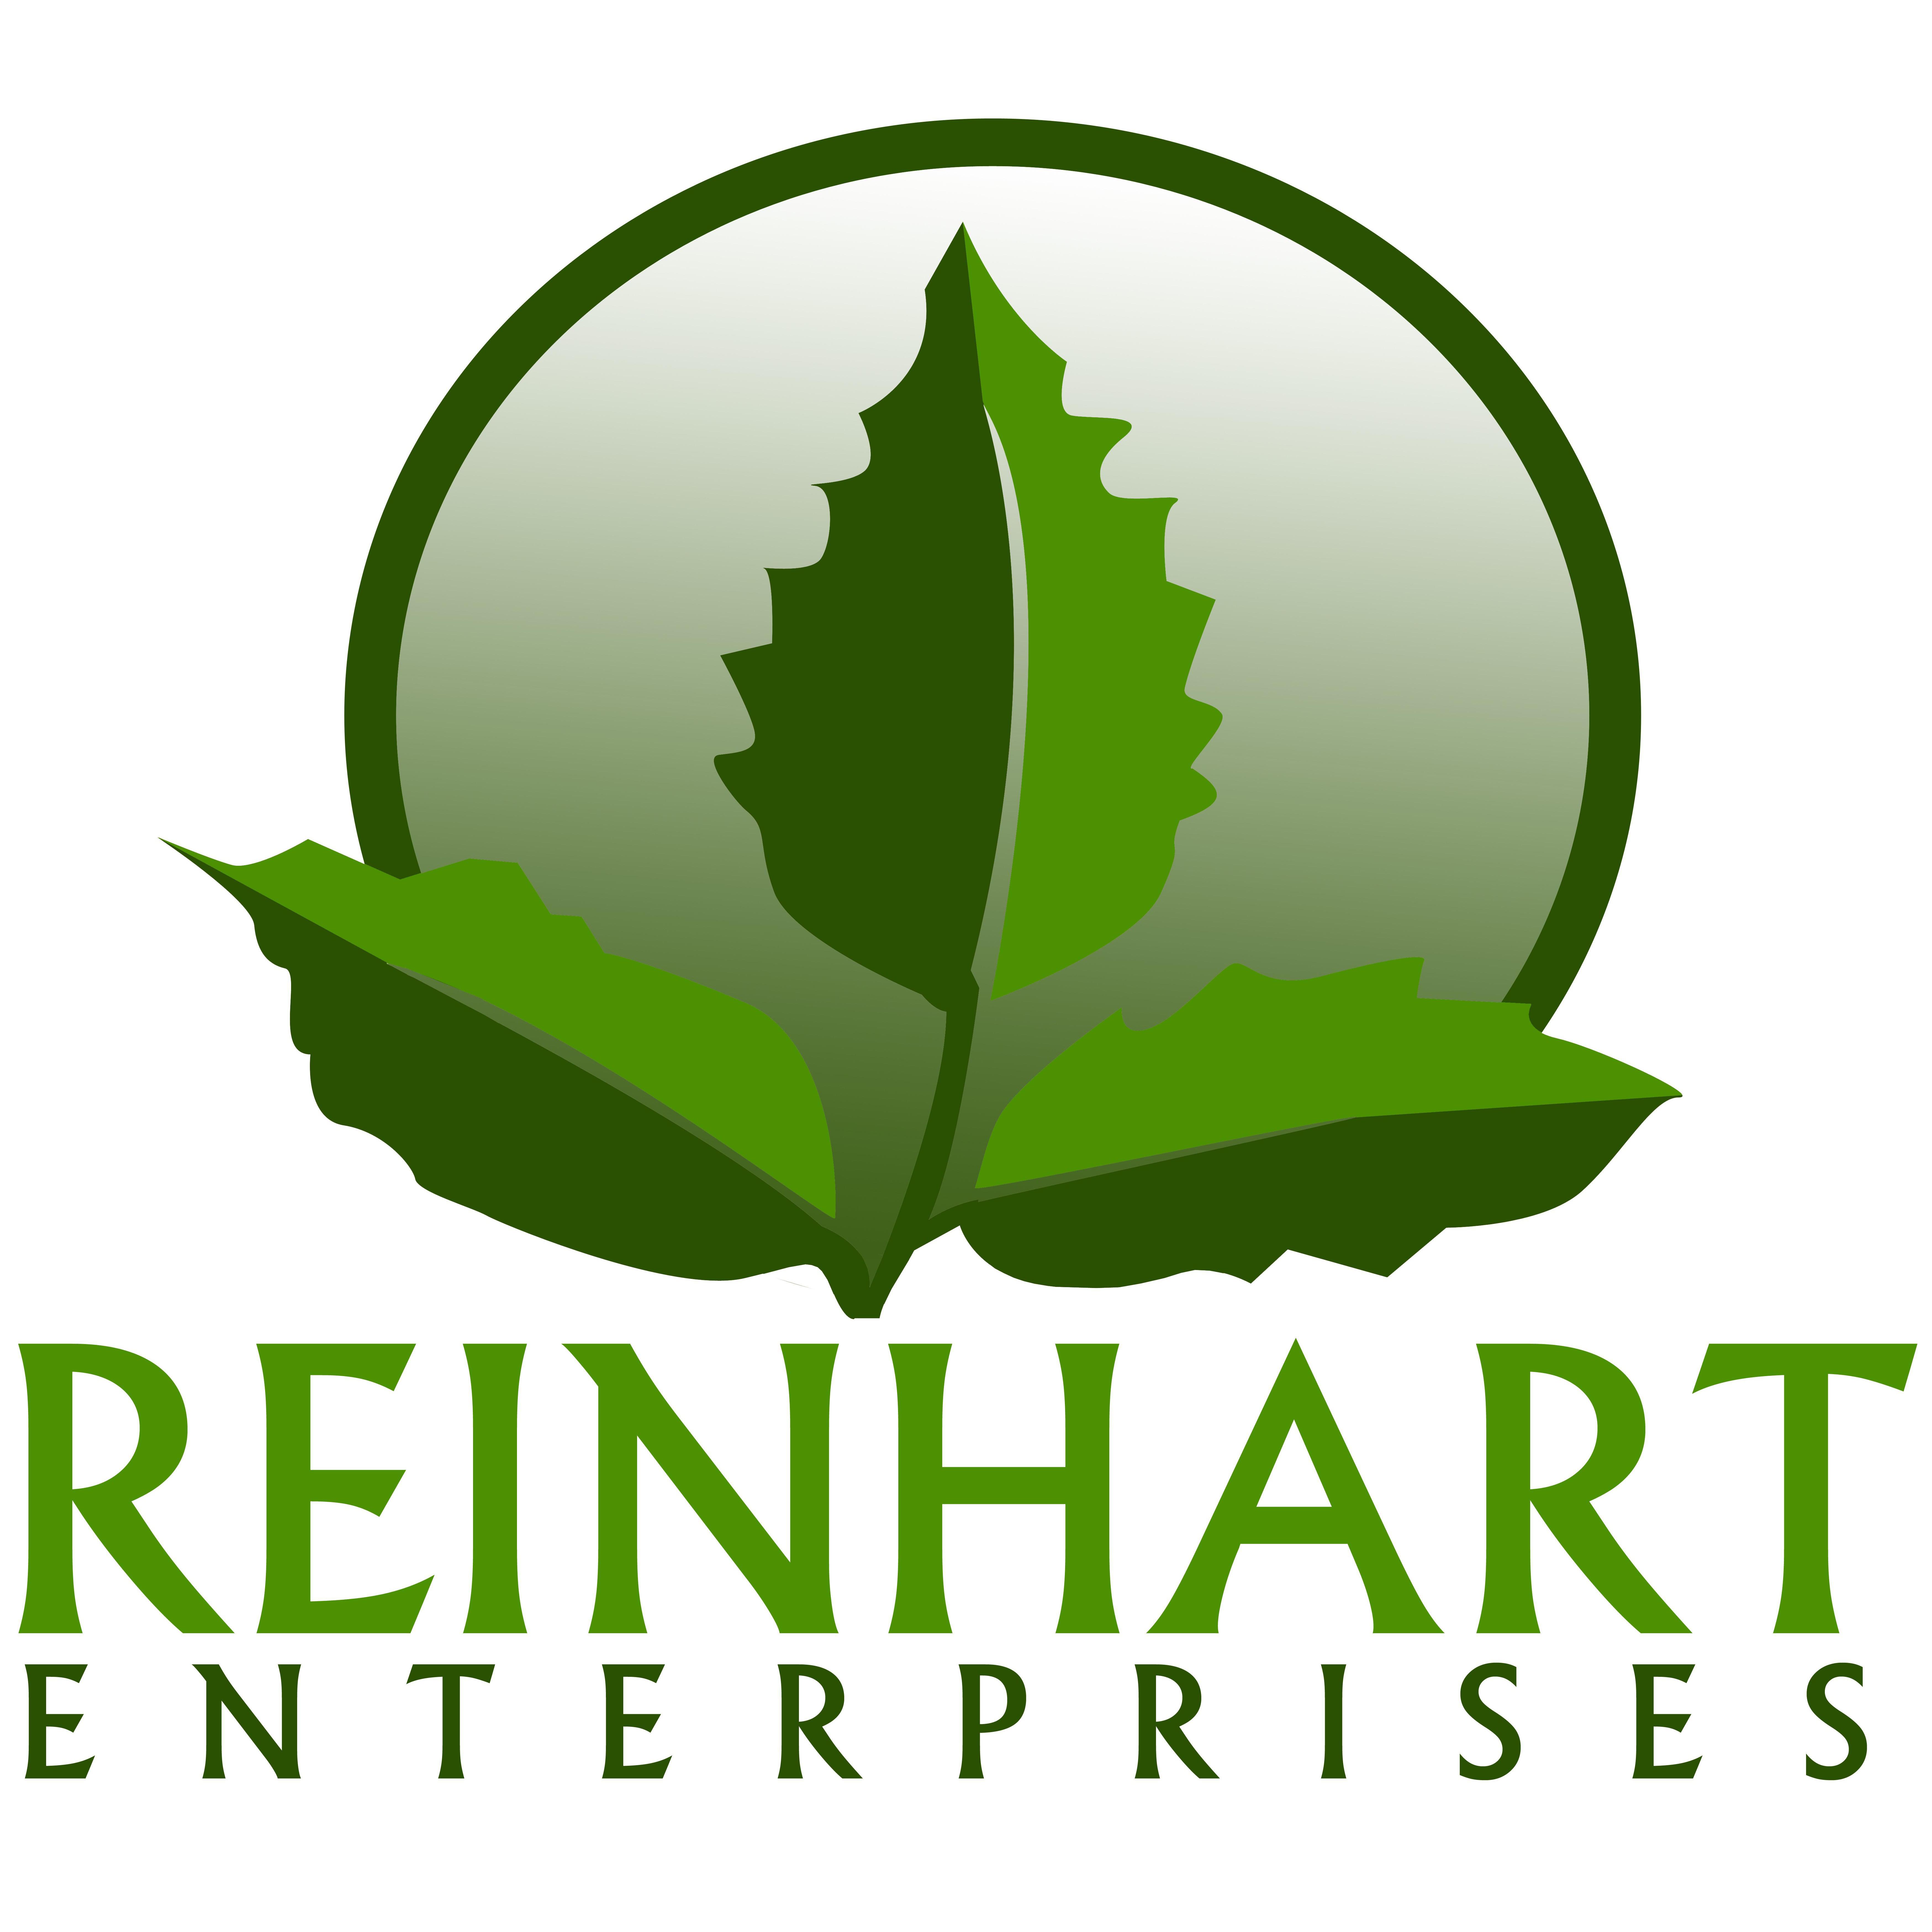 Reinhart Enterprises Landscaping and Lawn Care, LLC Amherst (716)207-2352